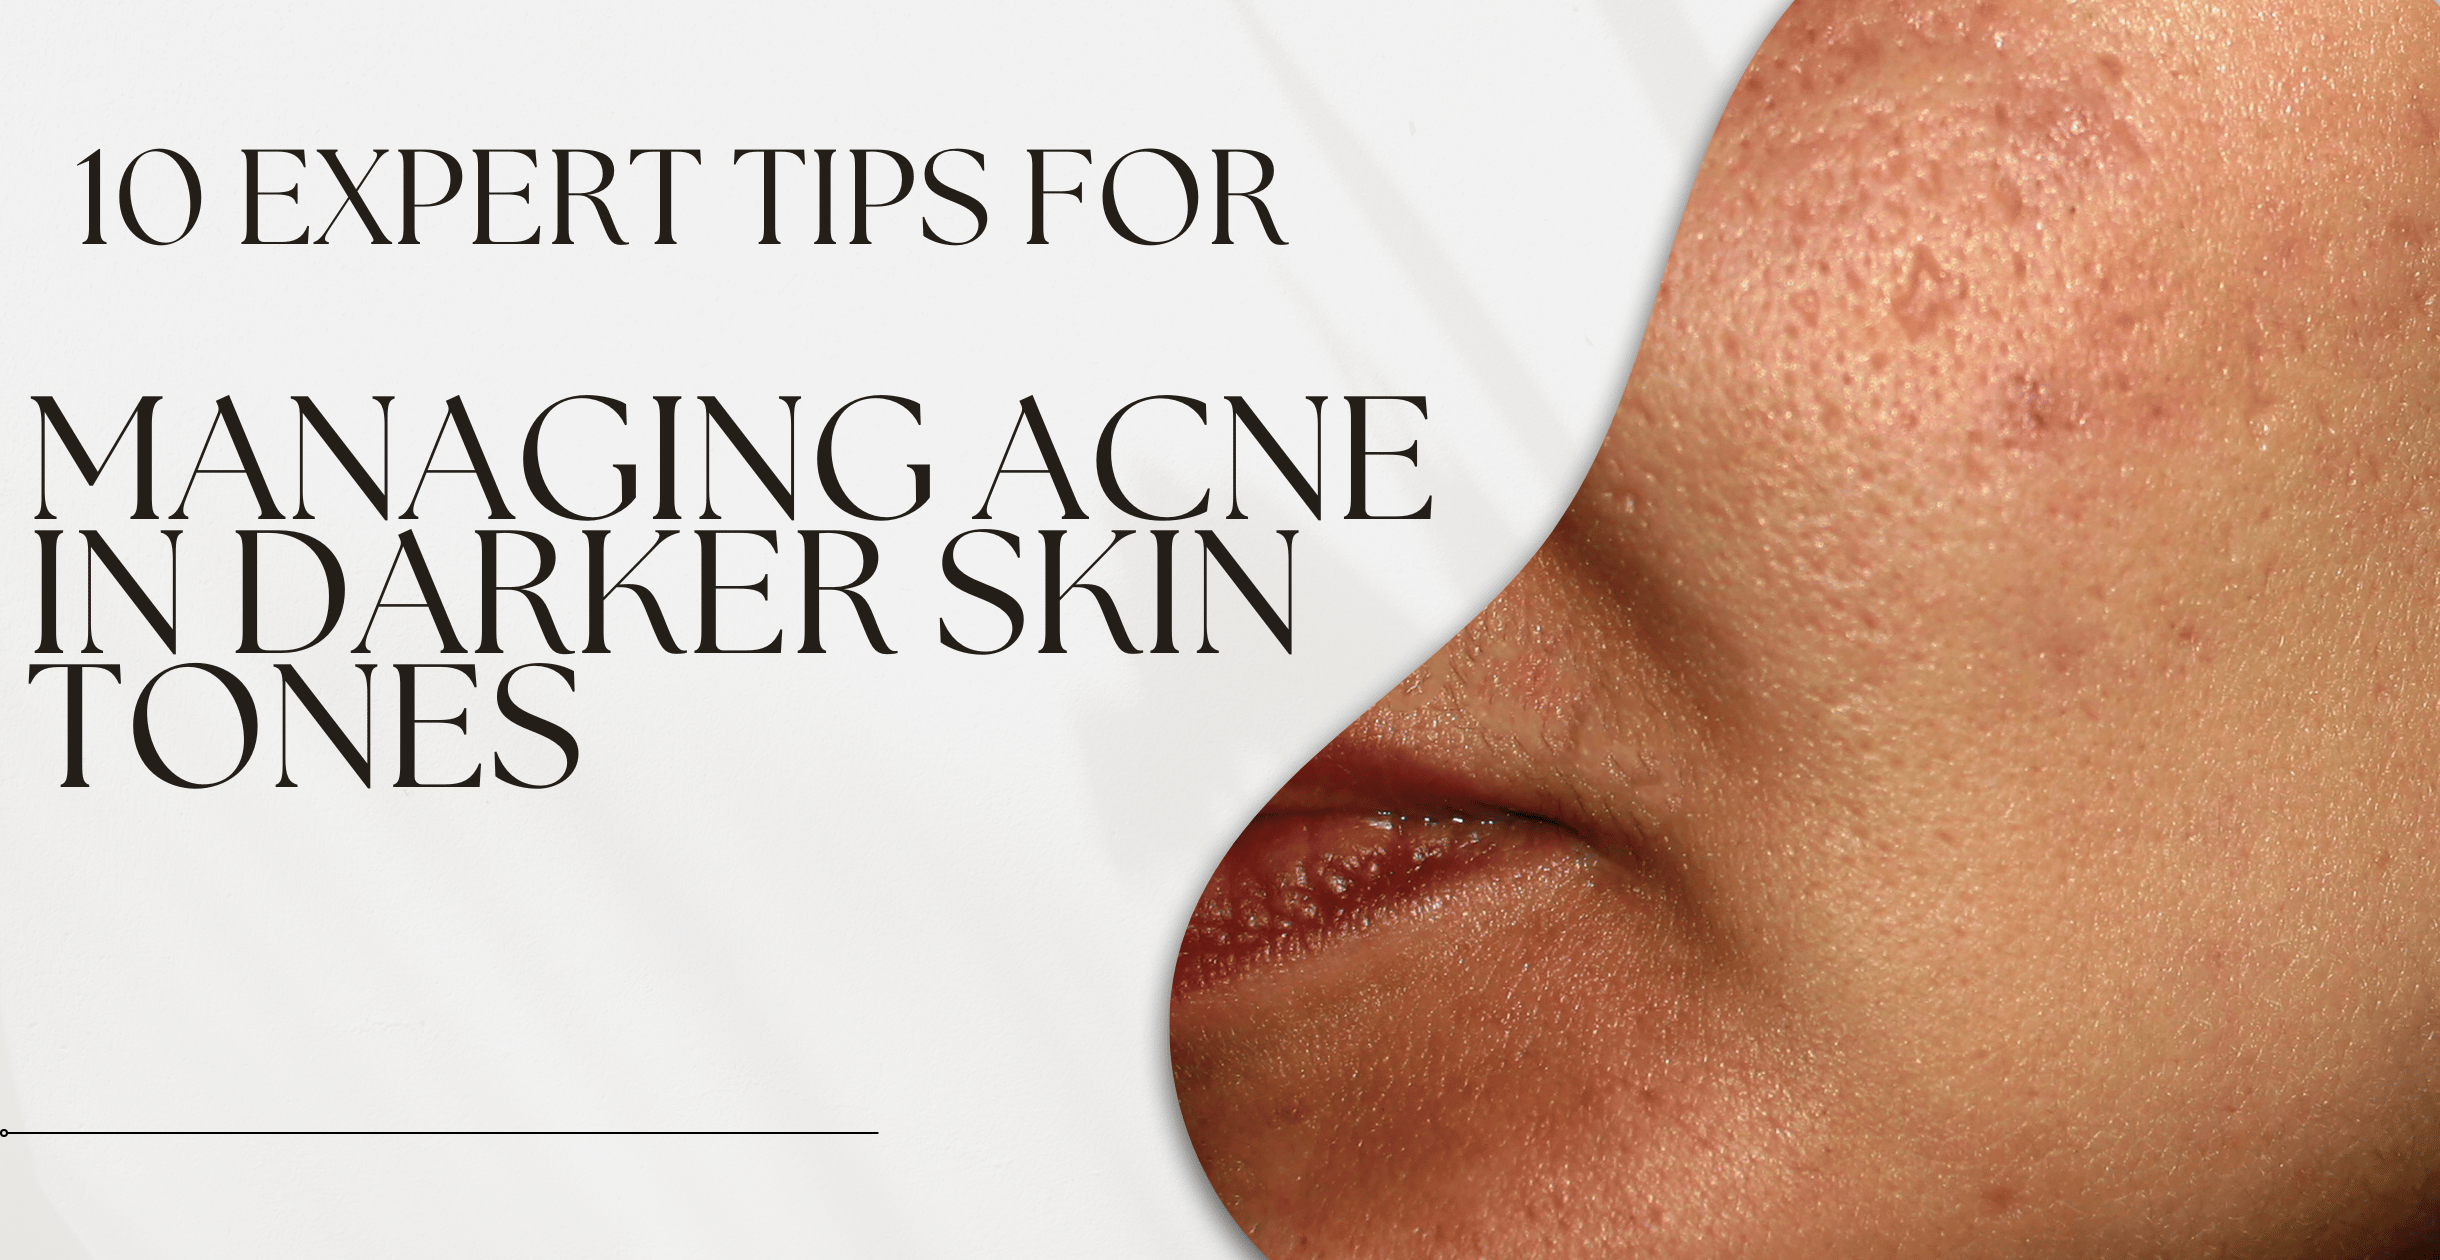 10 Expert Tips for Managing Acne in Darker Skin Tones